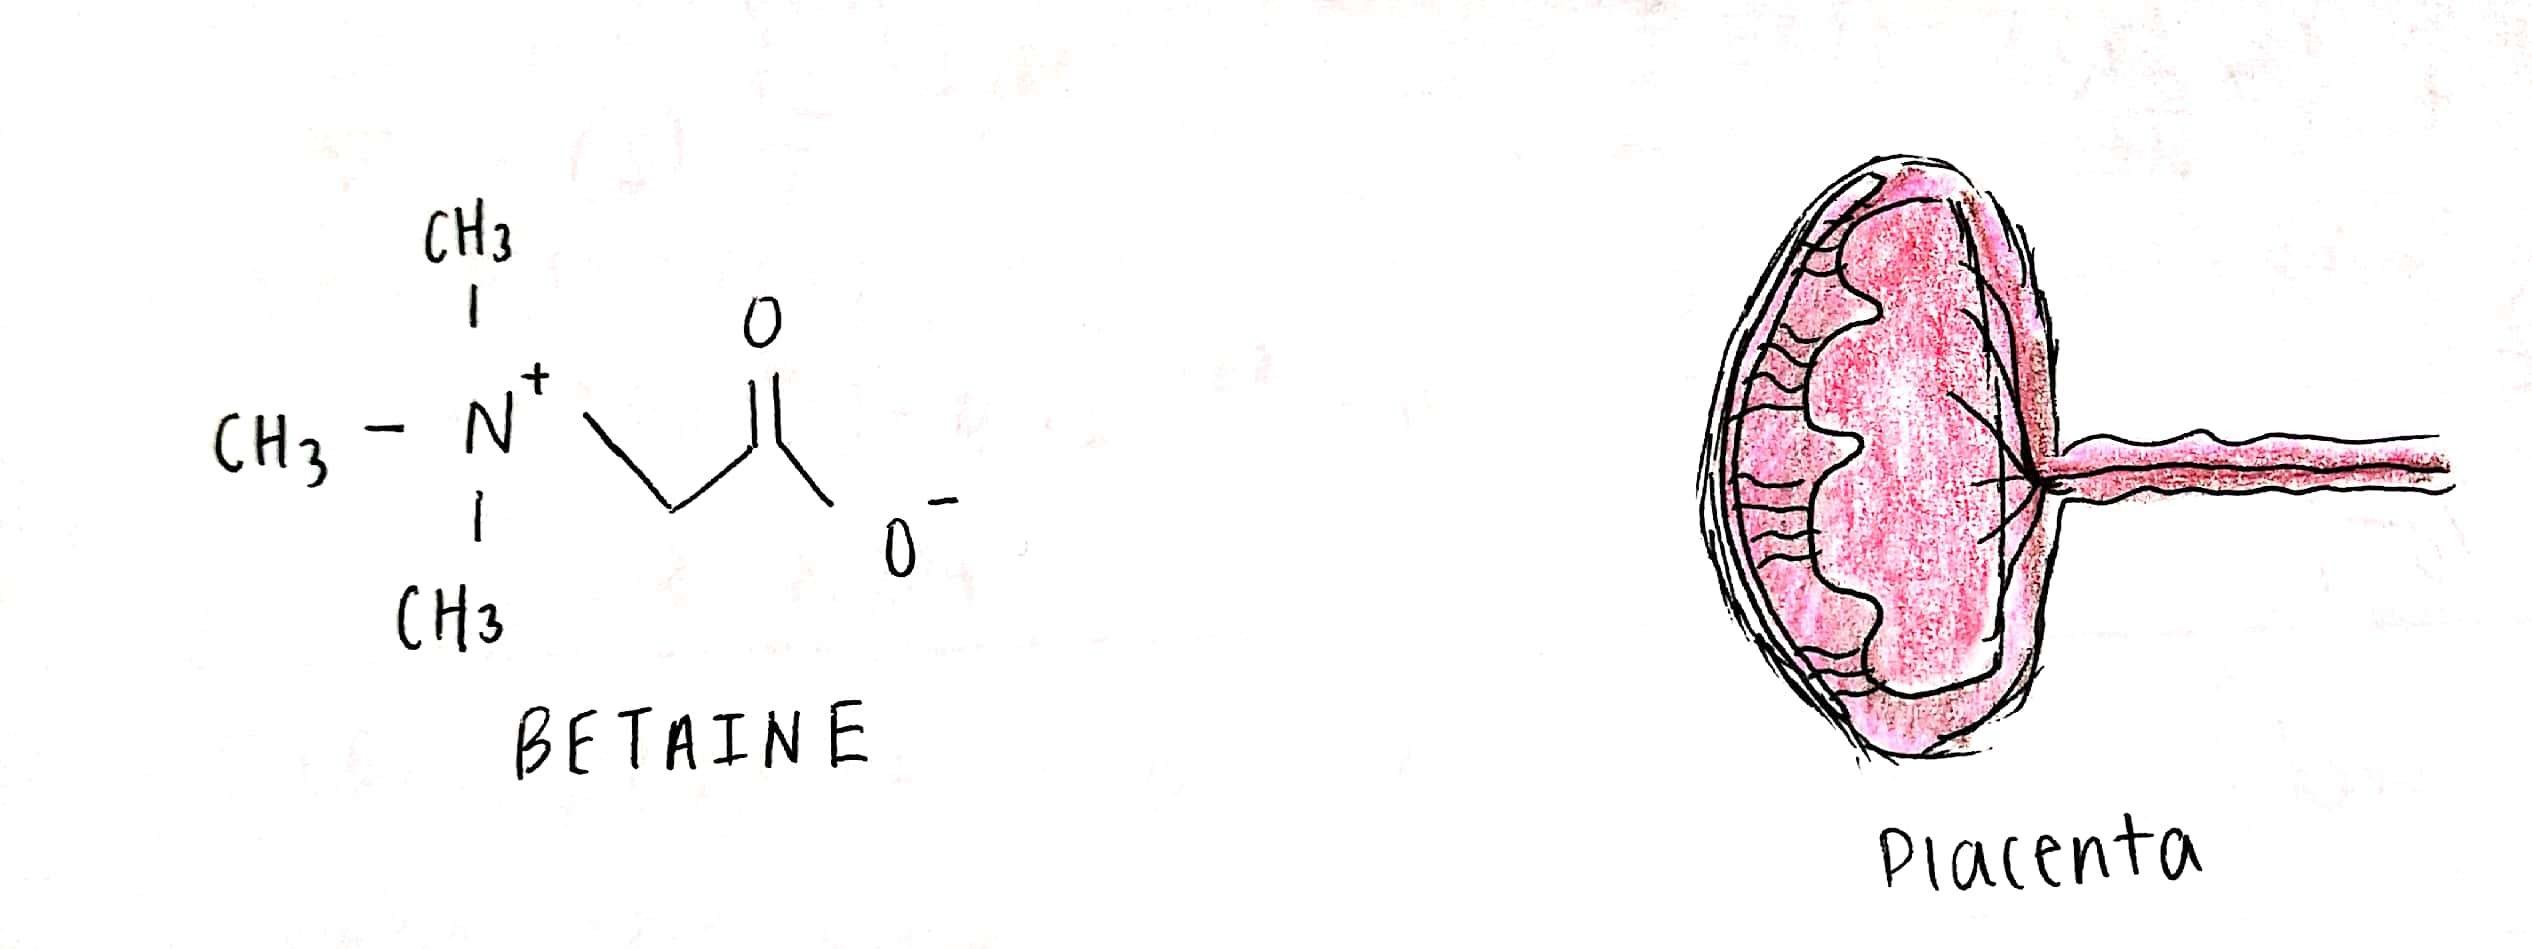 Betaine molecule + placenta cartoon